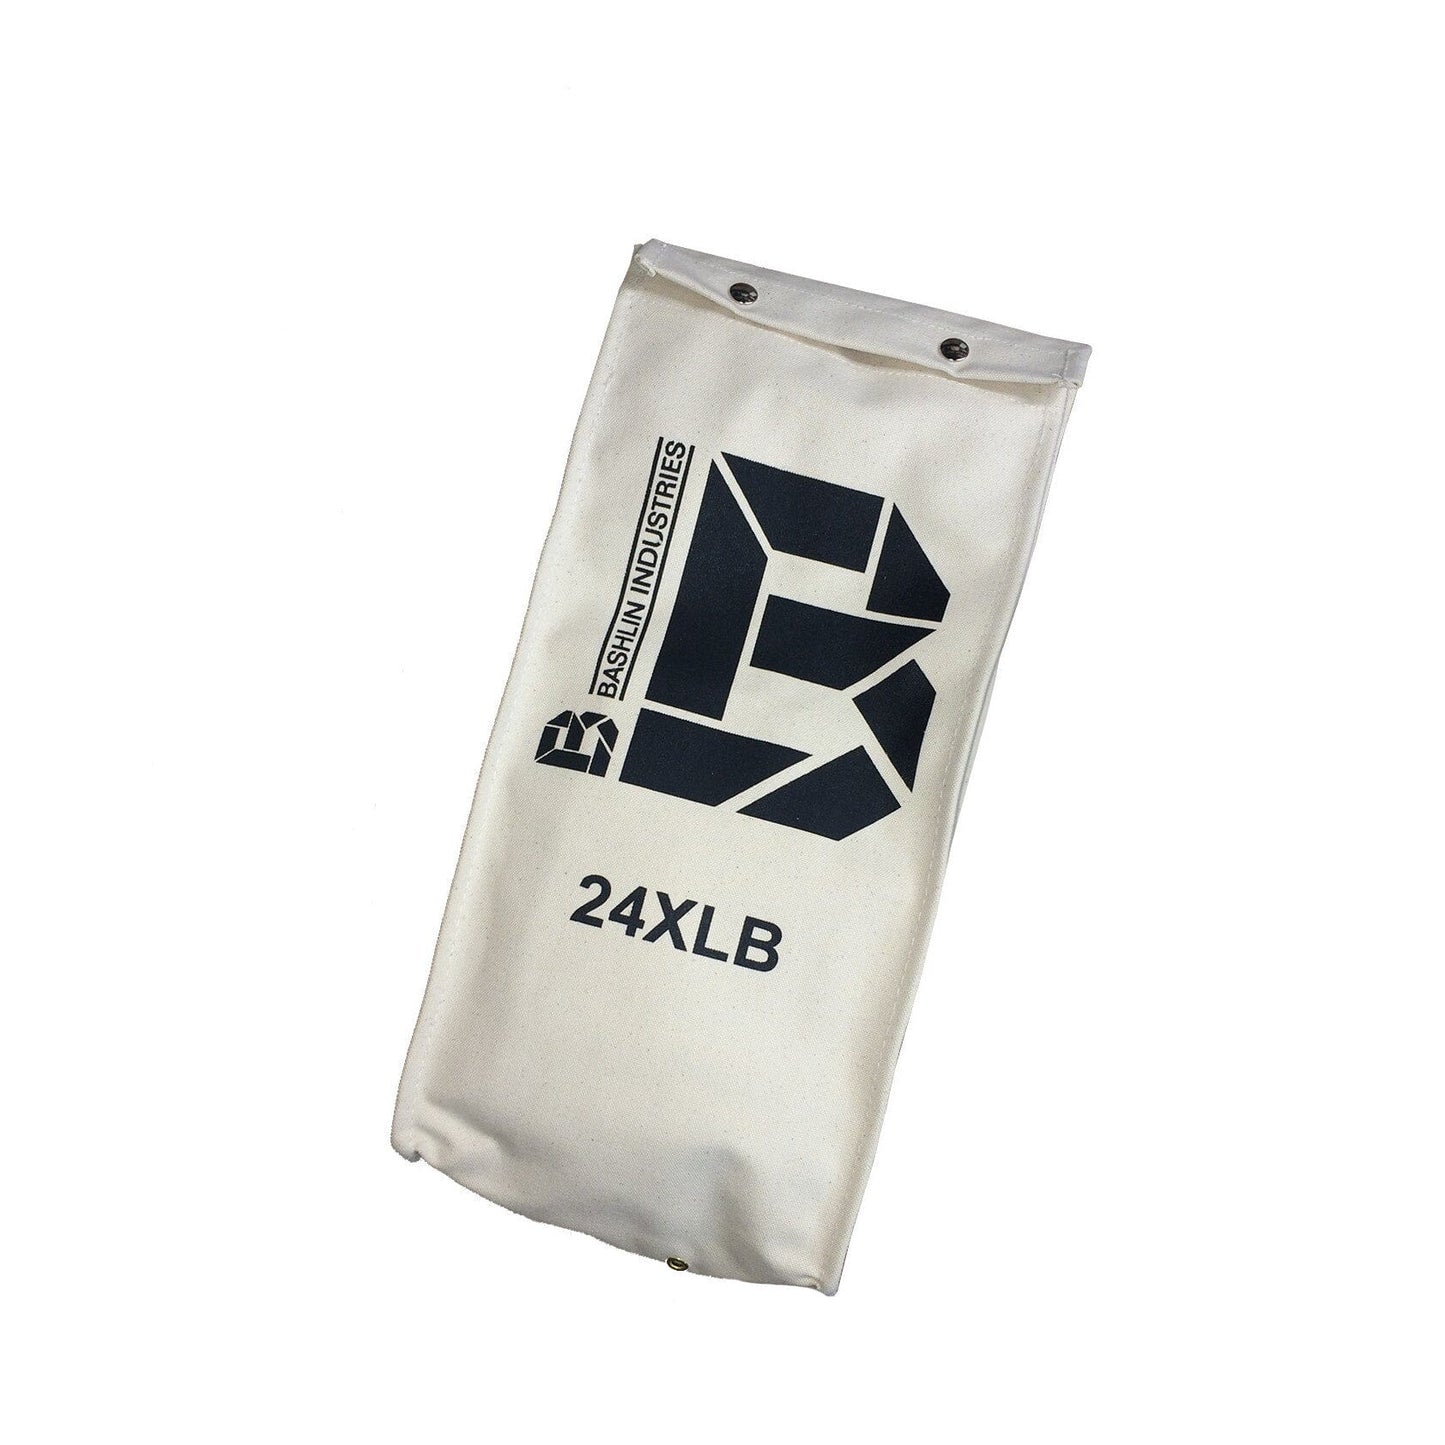 Bashlin Glove Bag 2 Pocket Glove Protector Bags -24XLB